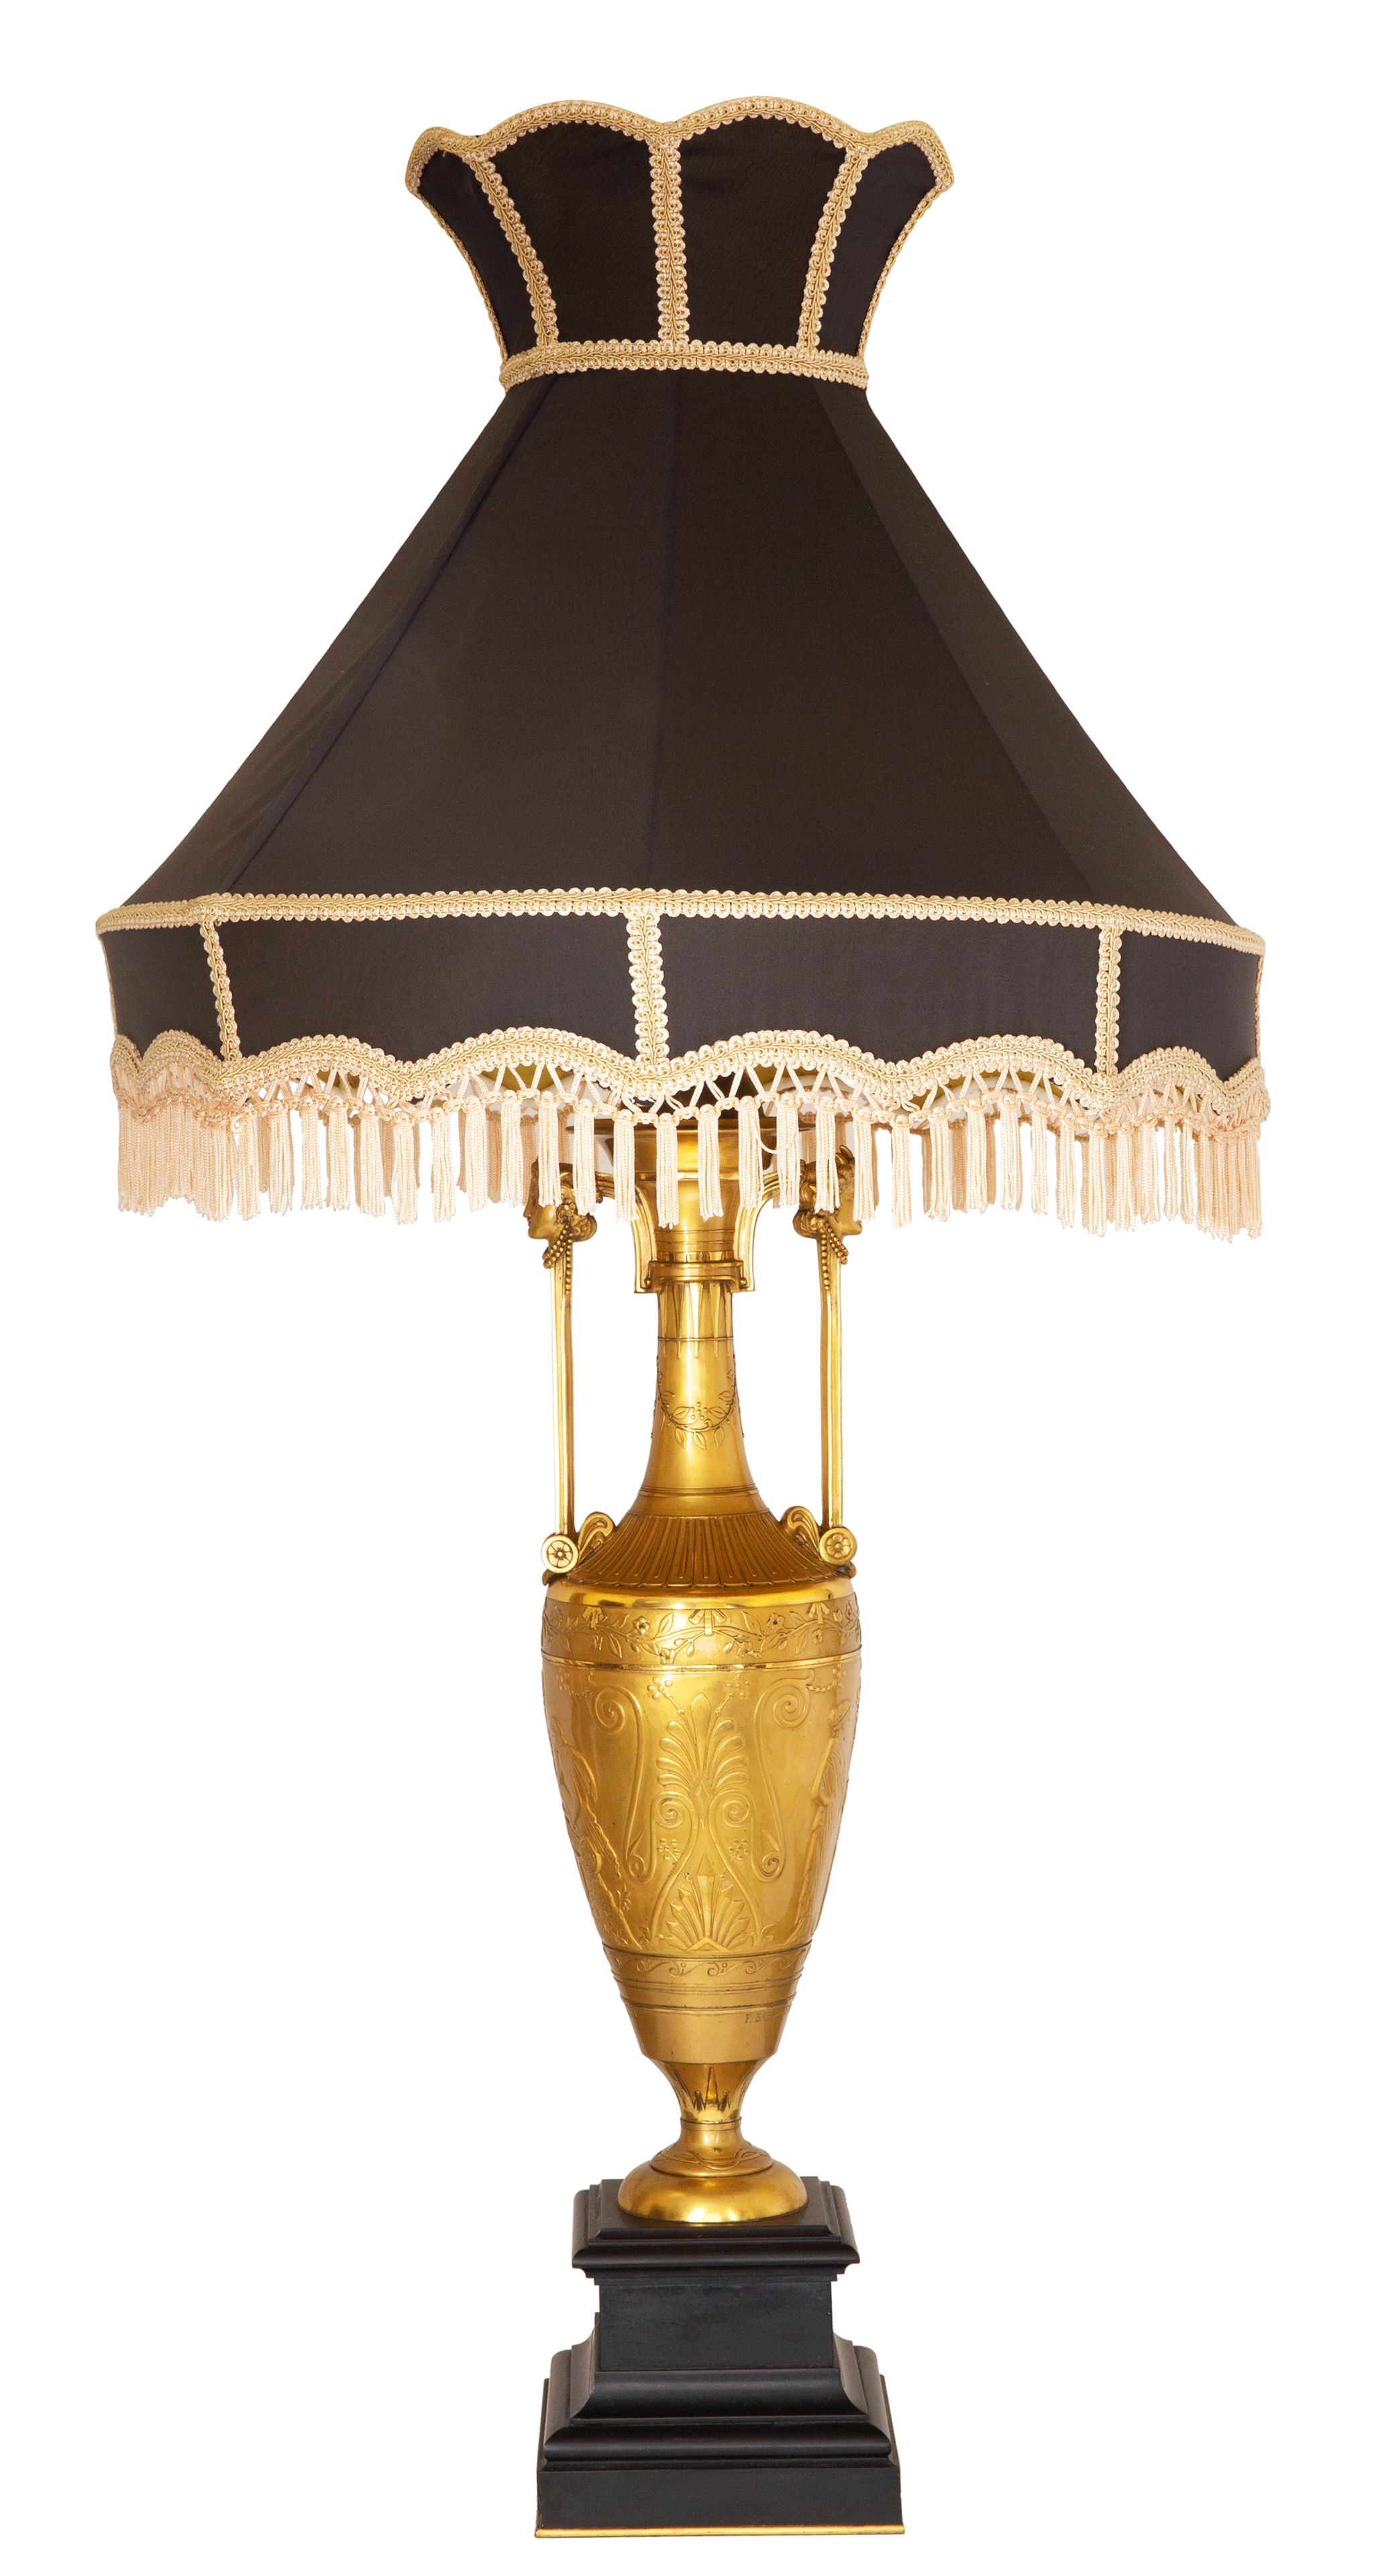 EGYPTIAN-REVIVAL GILT-BRONZE LAMP WITH BLACK SILK SHADE, 19TH CENTURY